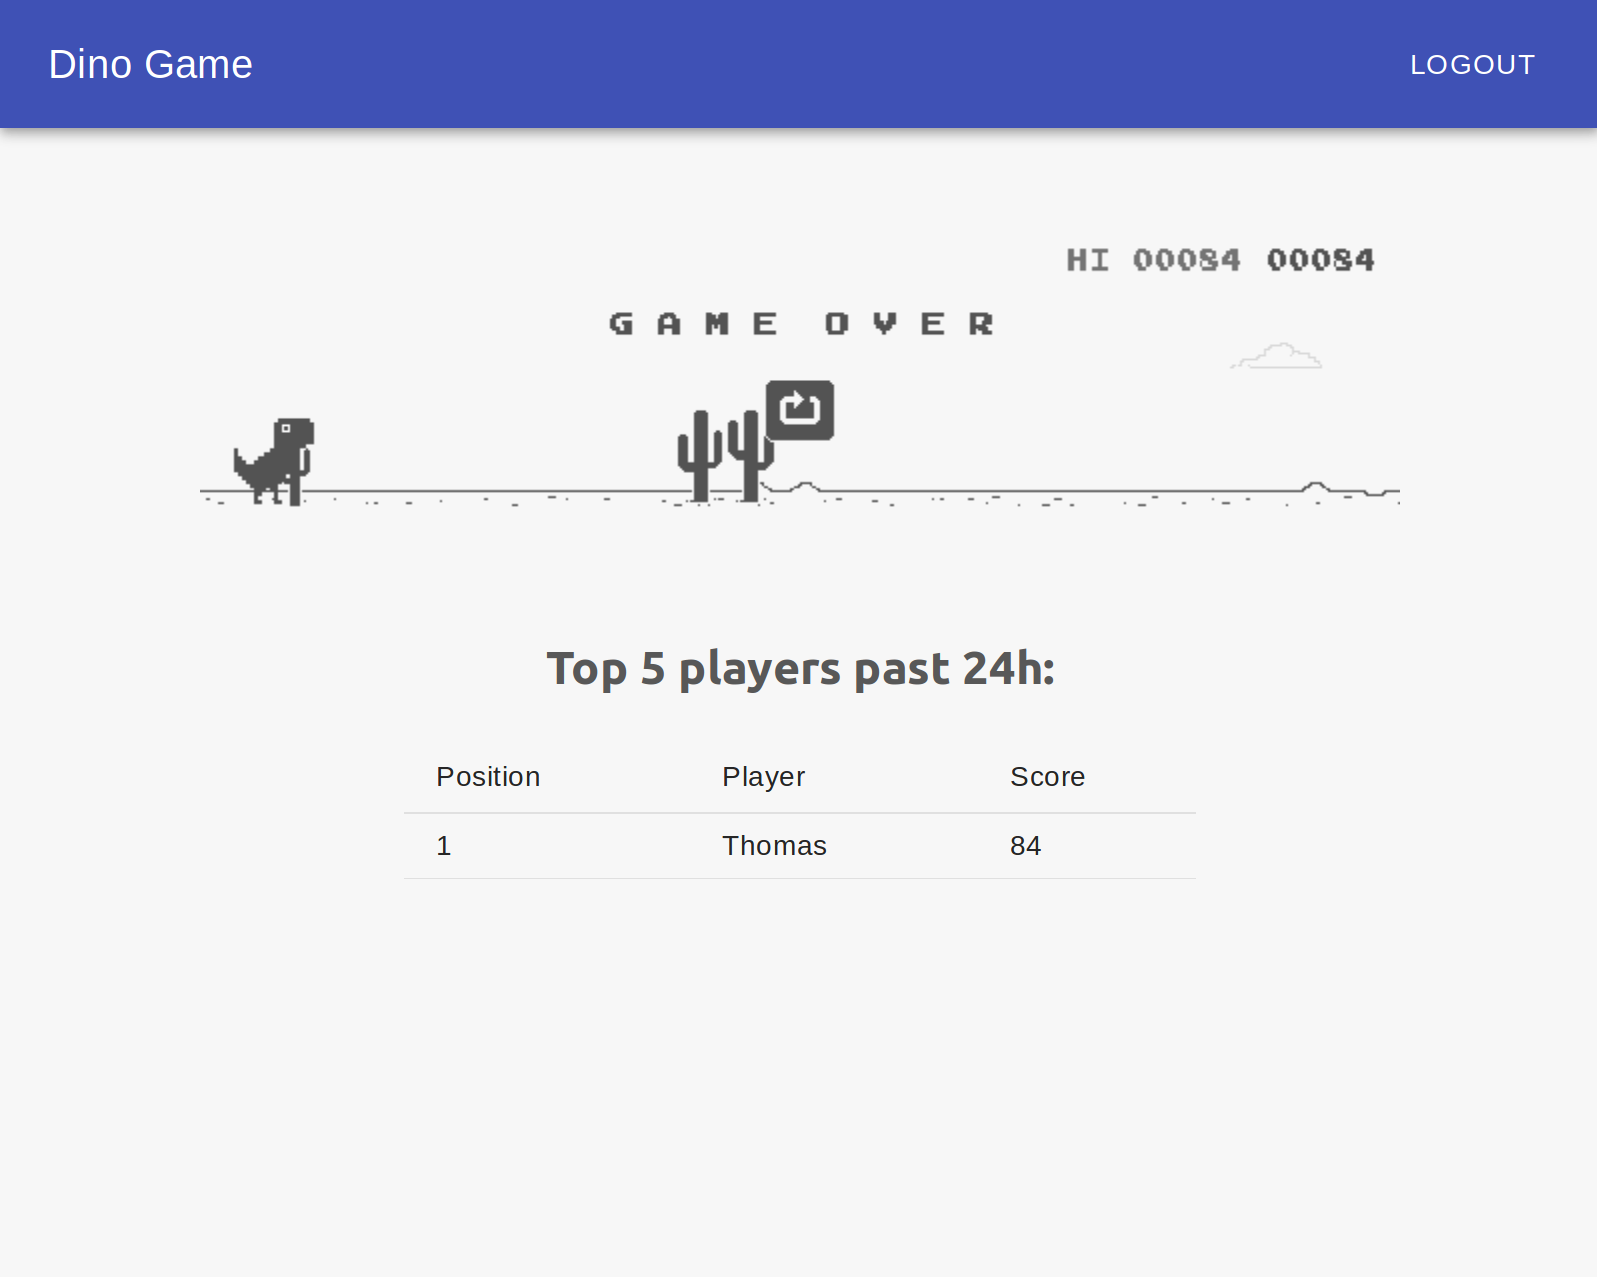 Dino Run [Google Chrome Offline] (Web) high score by Myself